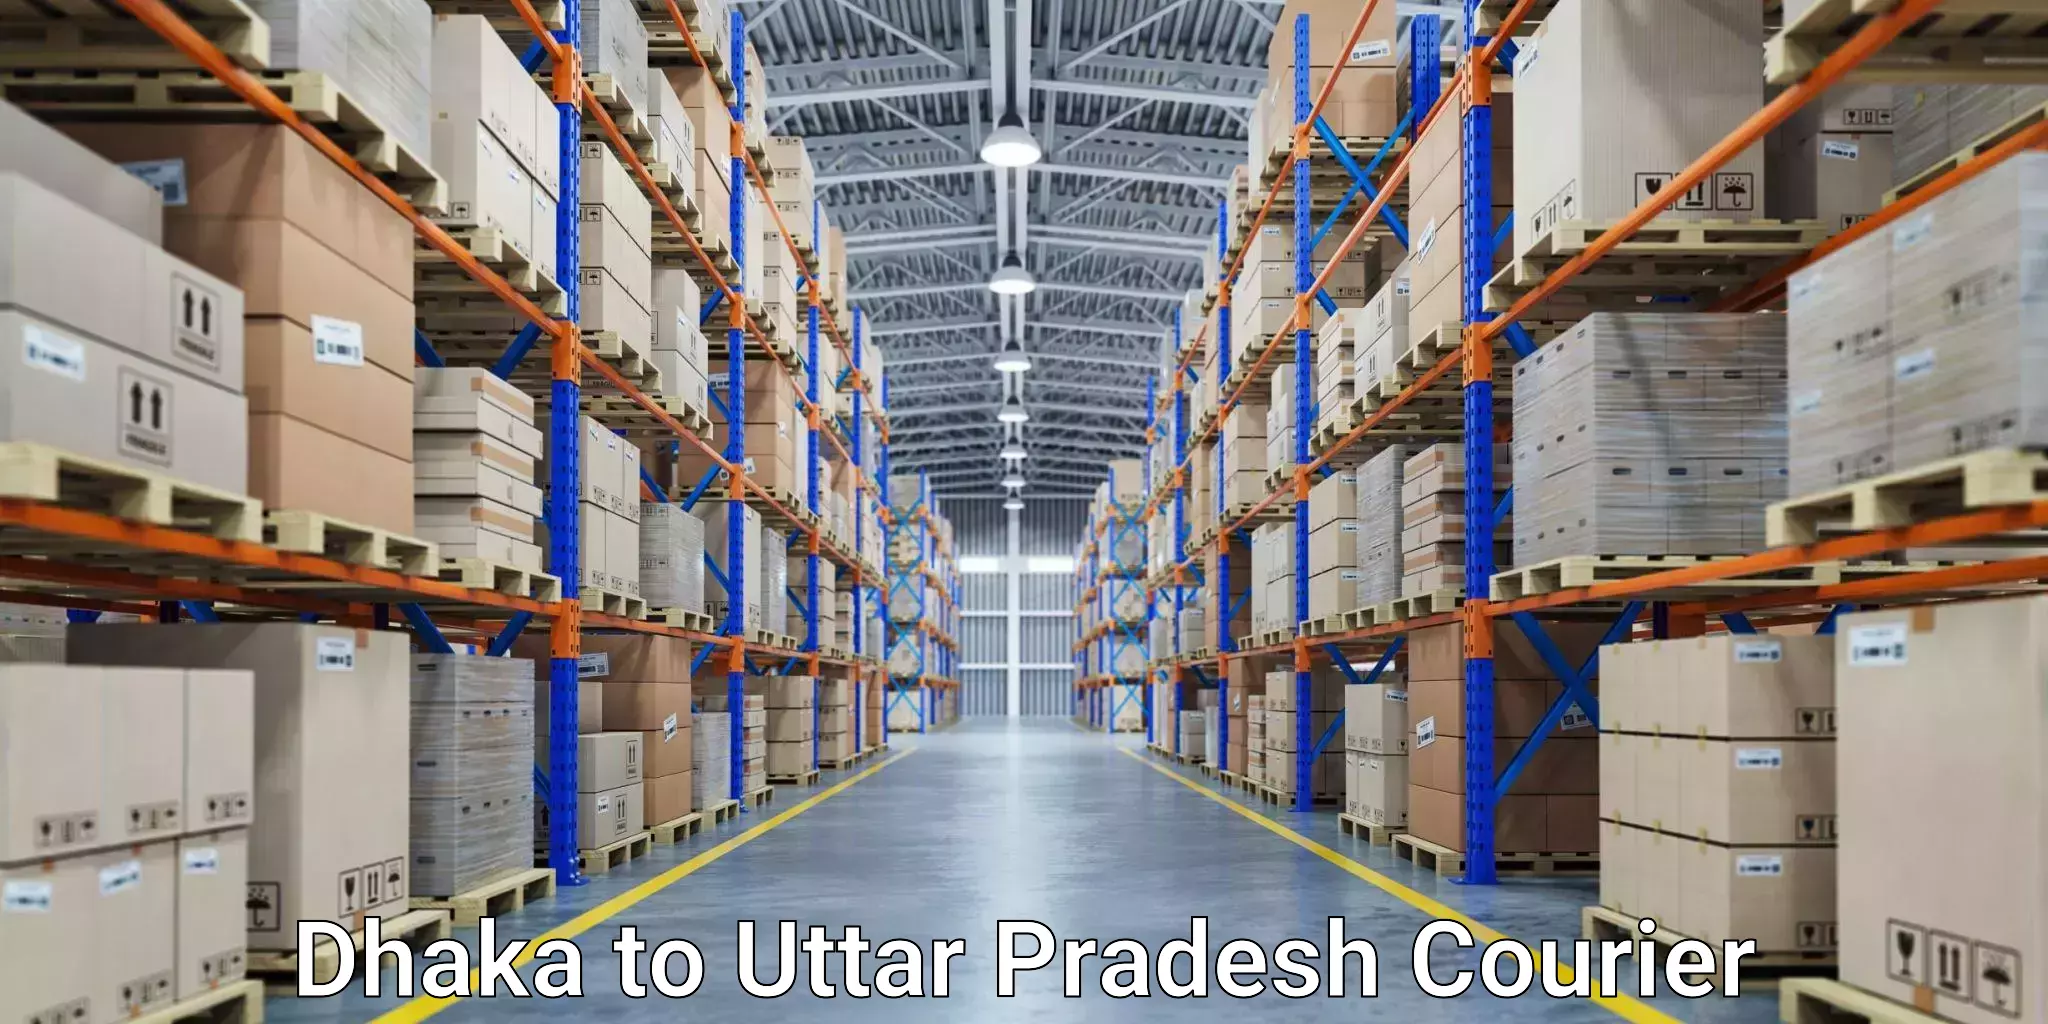 Global shipping networks Dhaka to Uttar Pradesh